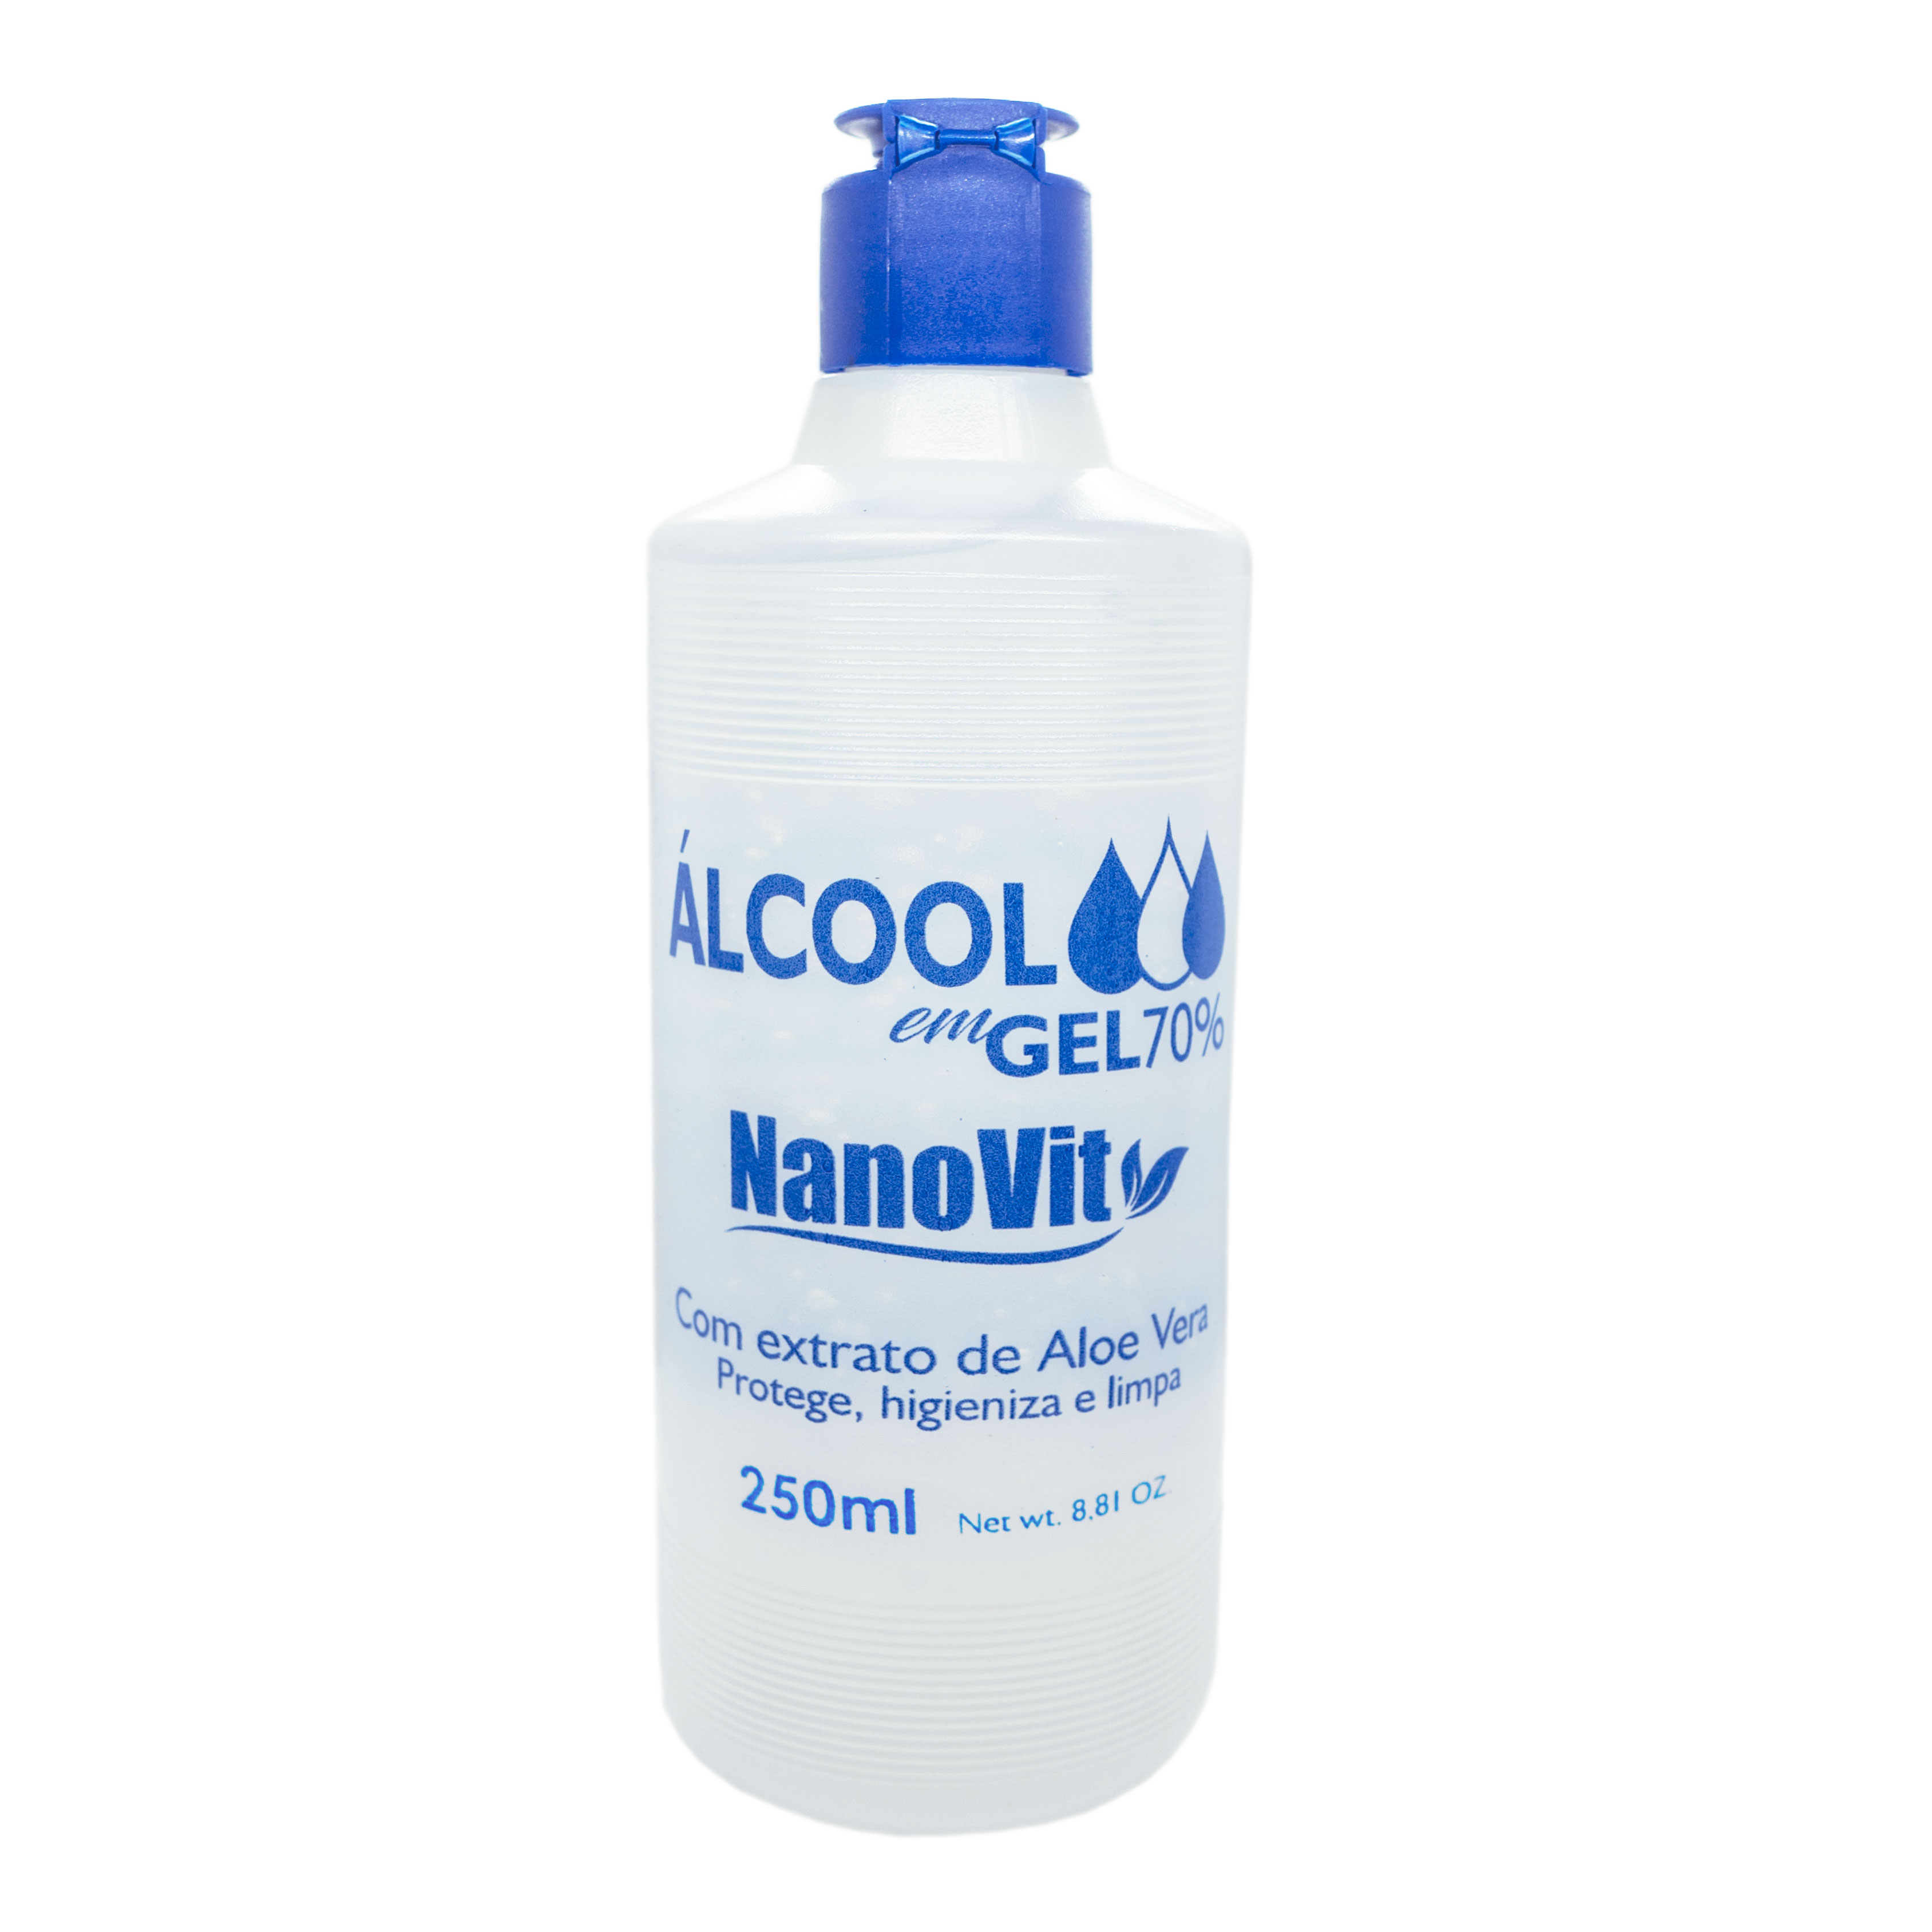 Alcool gel antisseptico 70 com 250 ml Nanovit com Aloe Vera